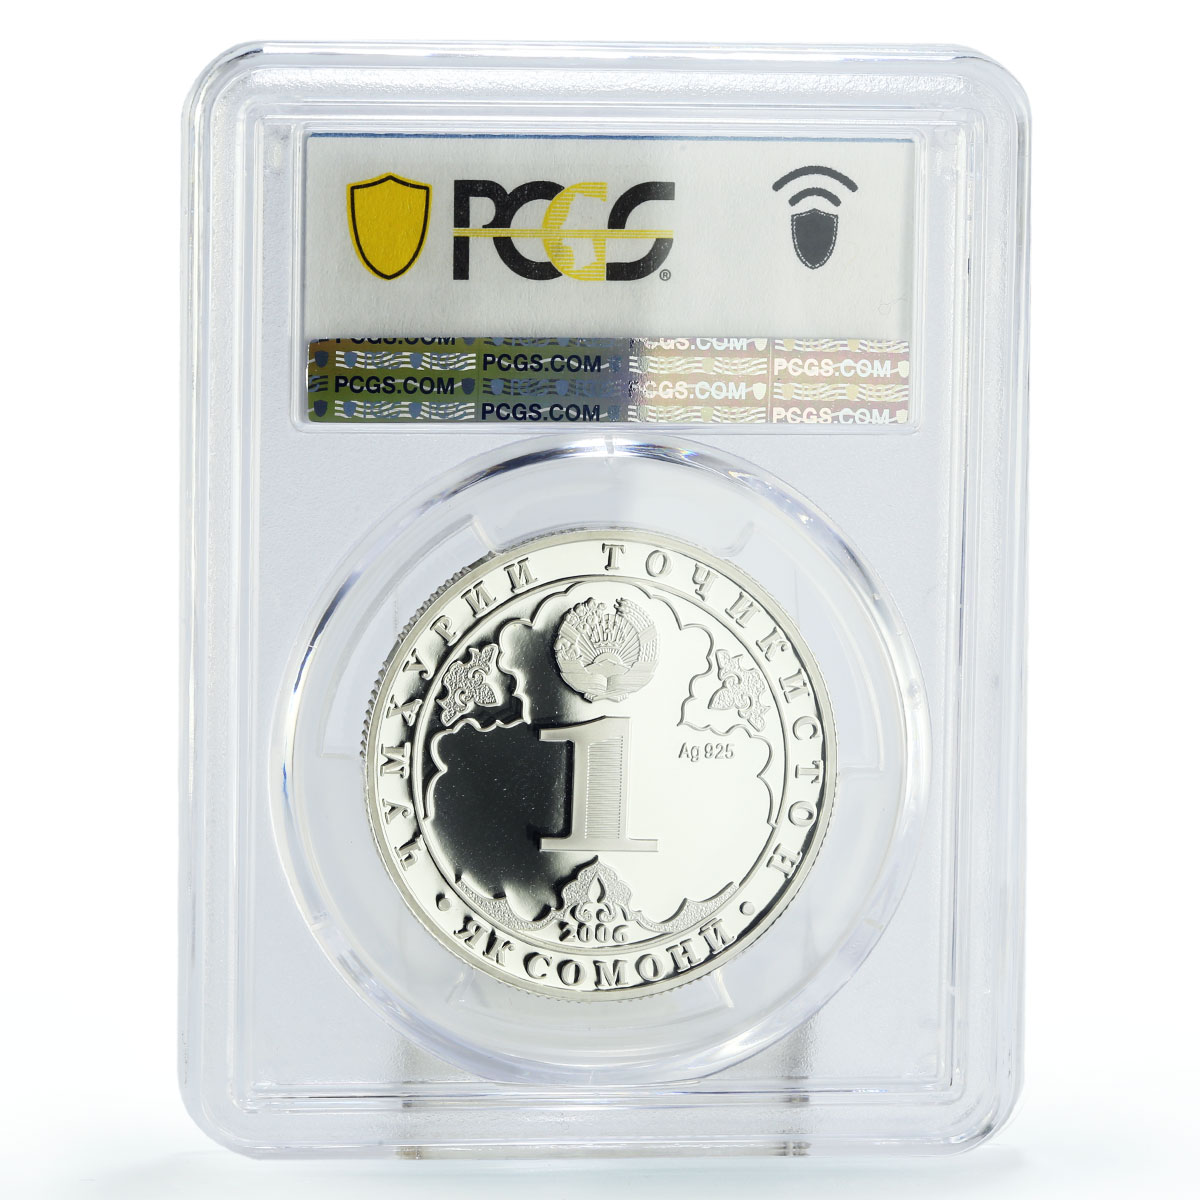 Tajikistan 1 somoni Year of the Aryan Civilization PR69 PCGS silver coin 2006